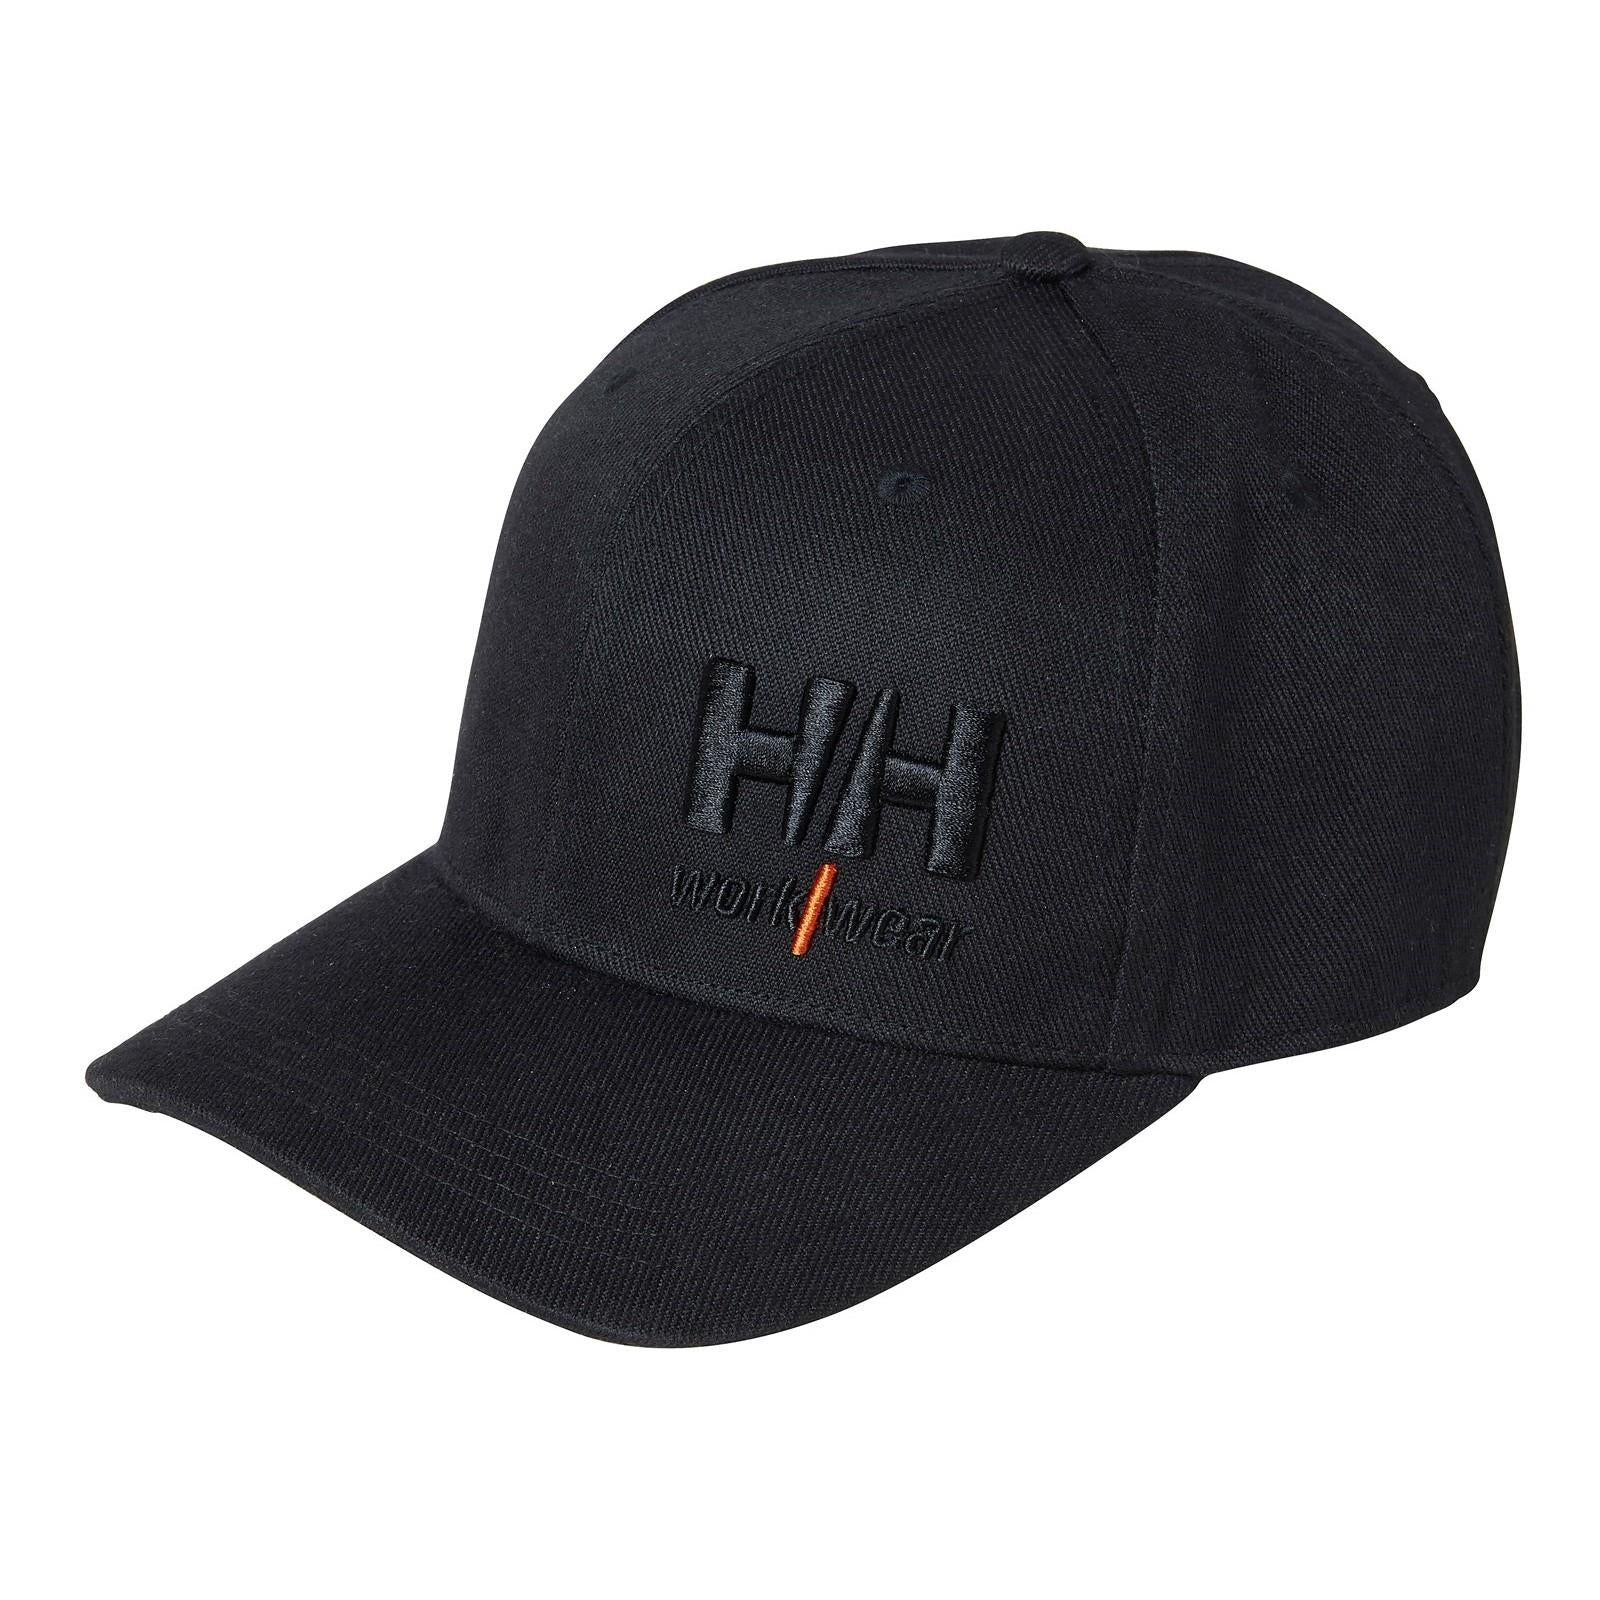 Helly Hansen Kensington black peaked baseball cap #79802